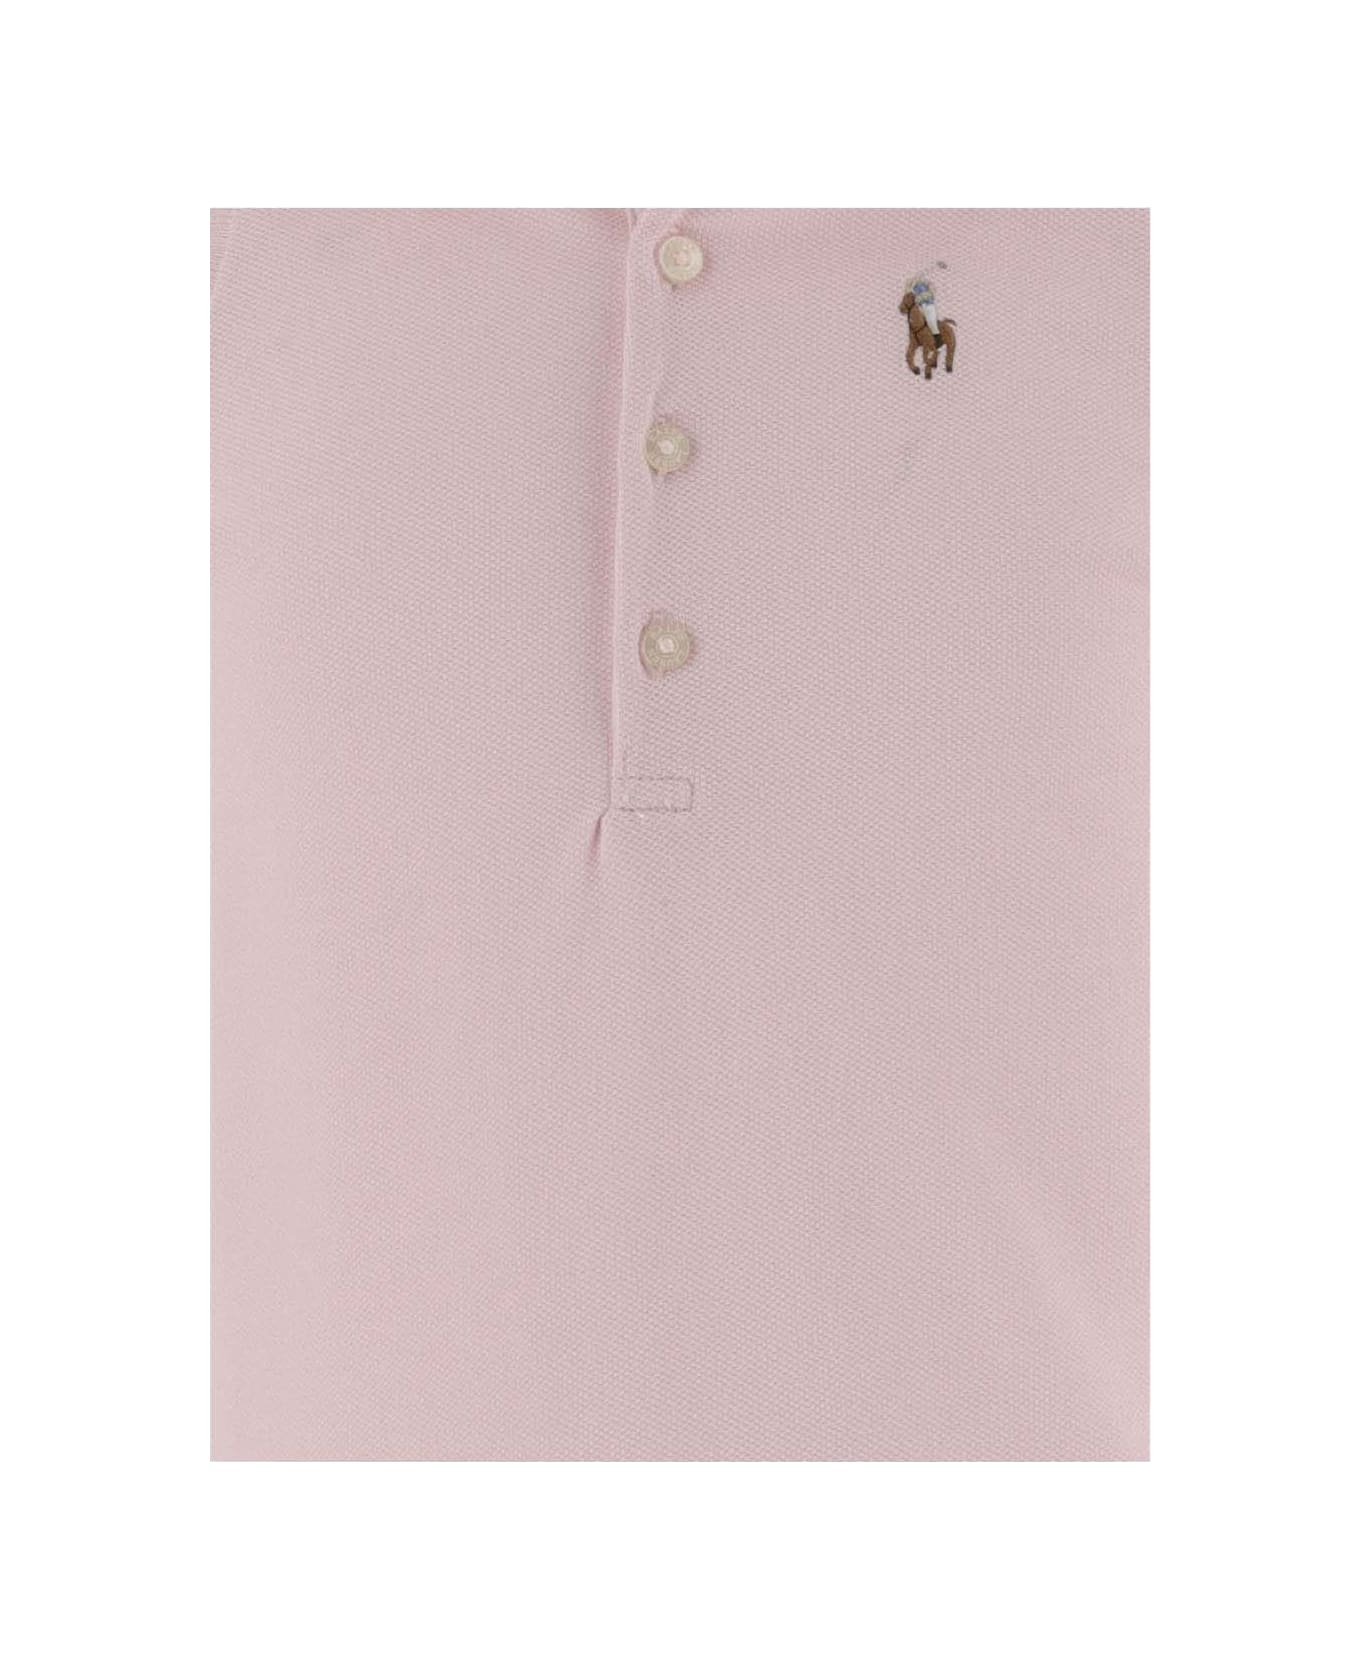 Polo Ralph Lauren Sleeveless Polo Shirt With Logo - Pink